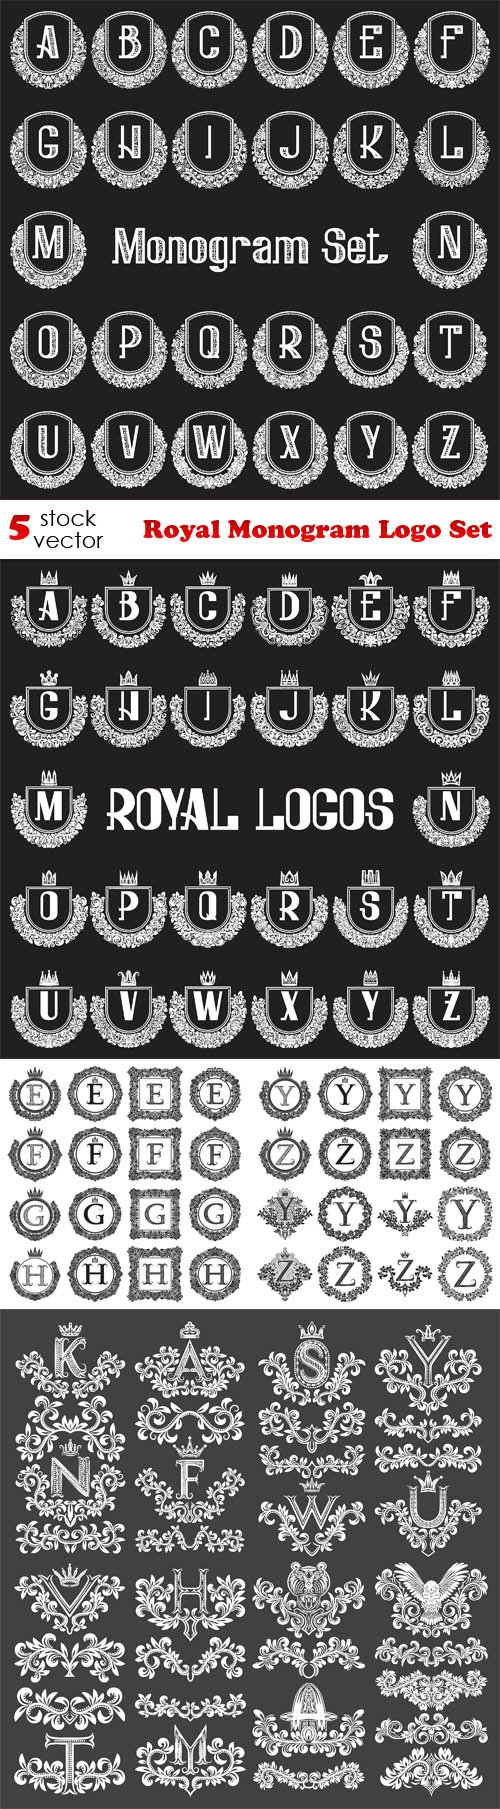 Vectors - Royal Monogram Logo Set